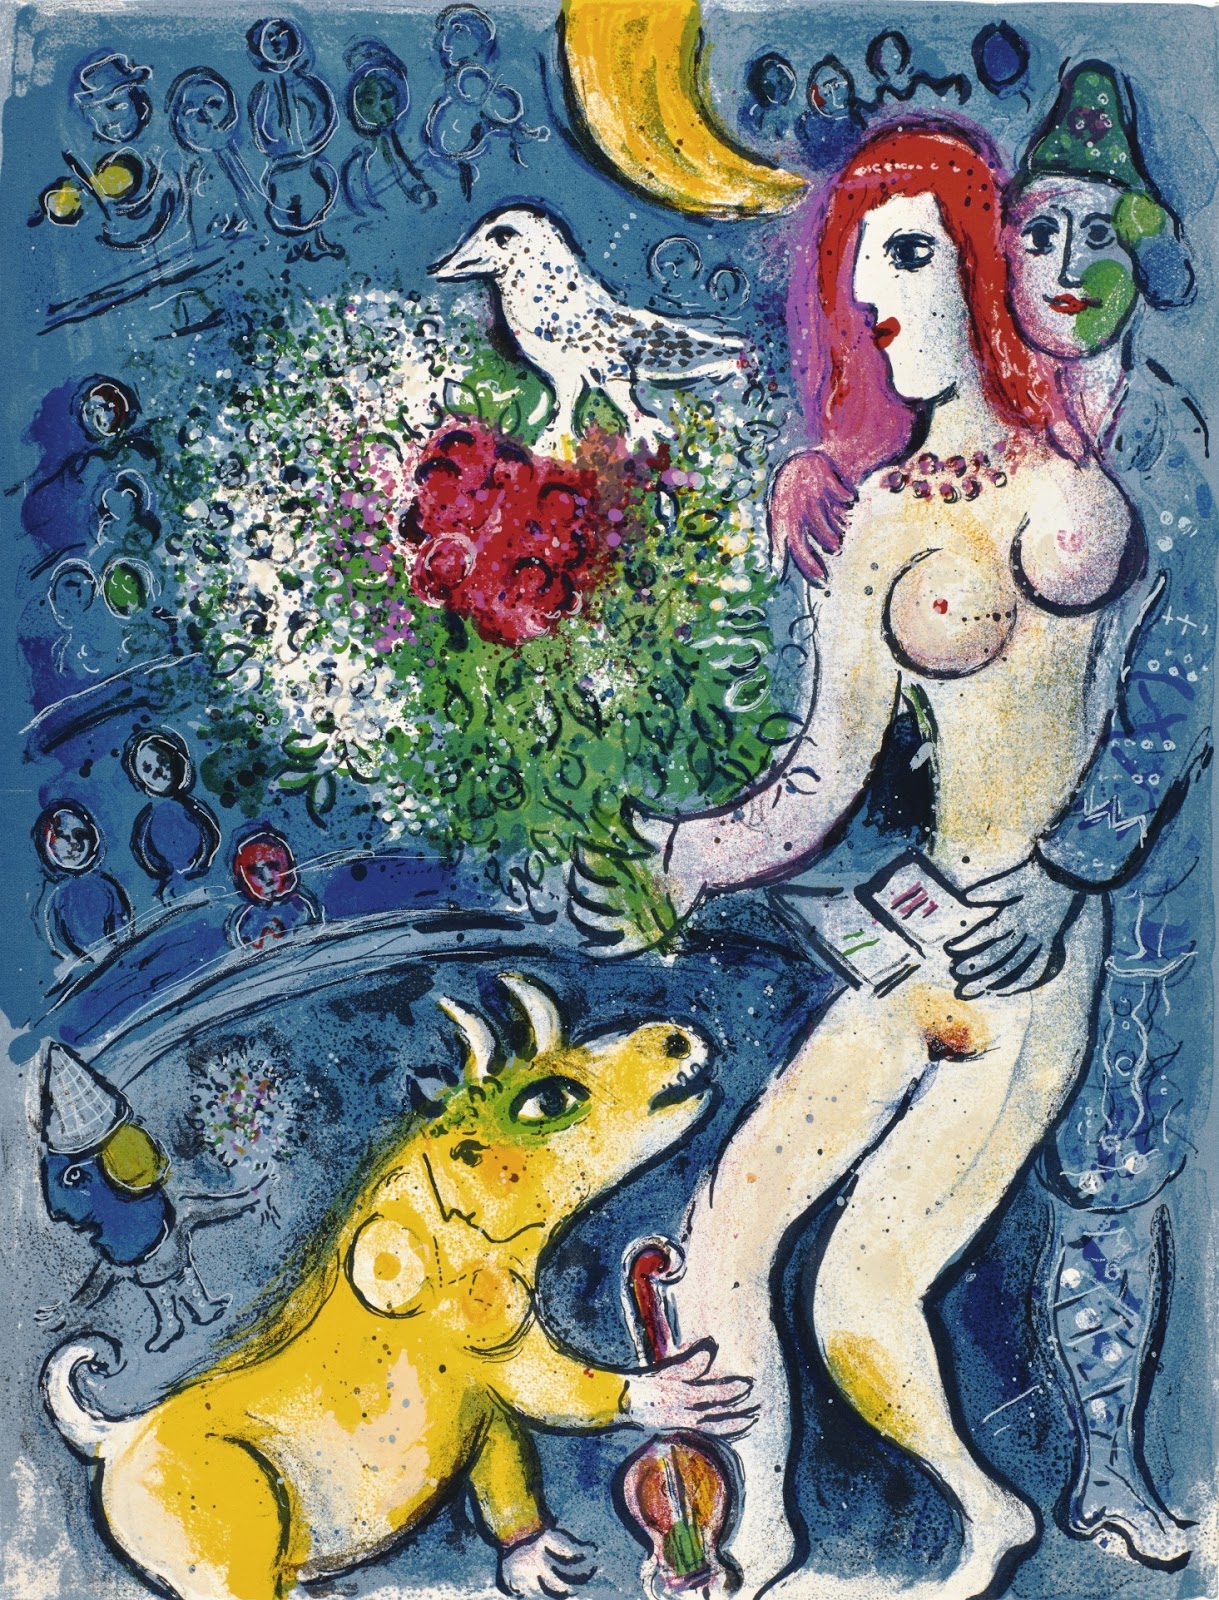 Marc+Chagall-1887-1985 (40).jpg